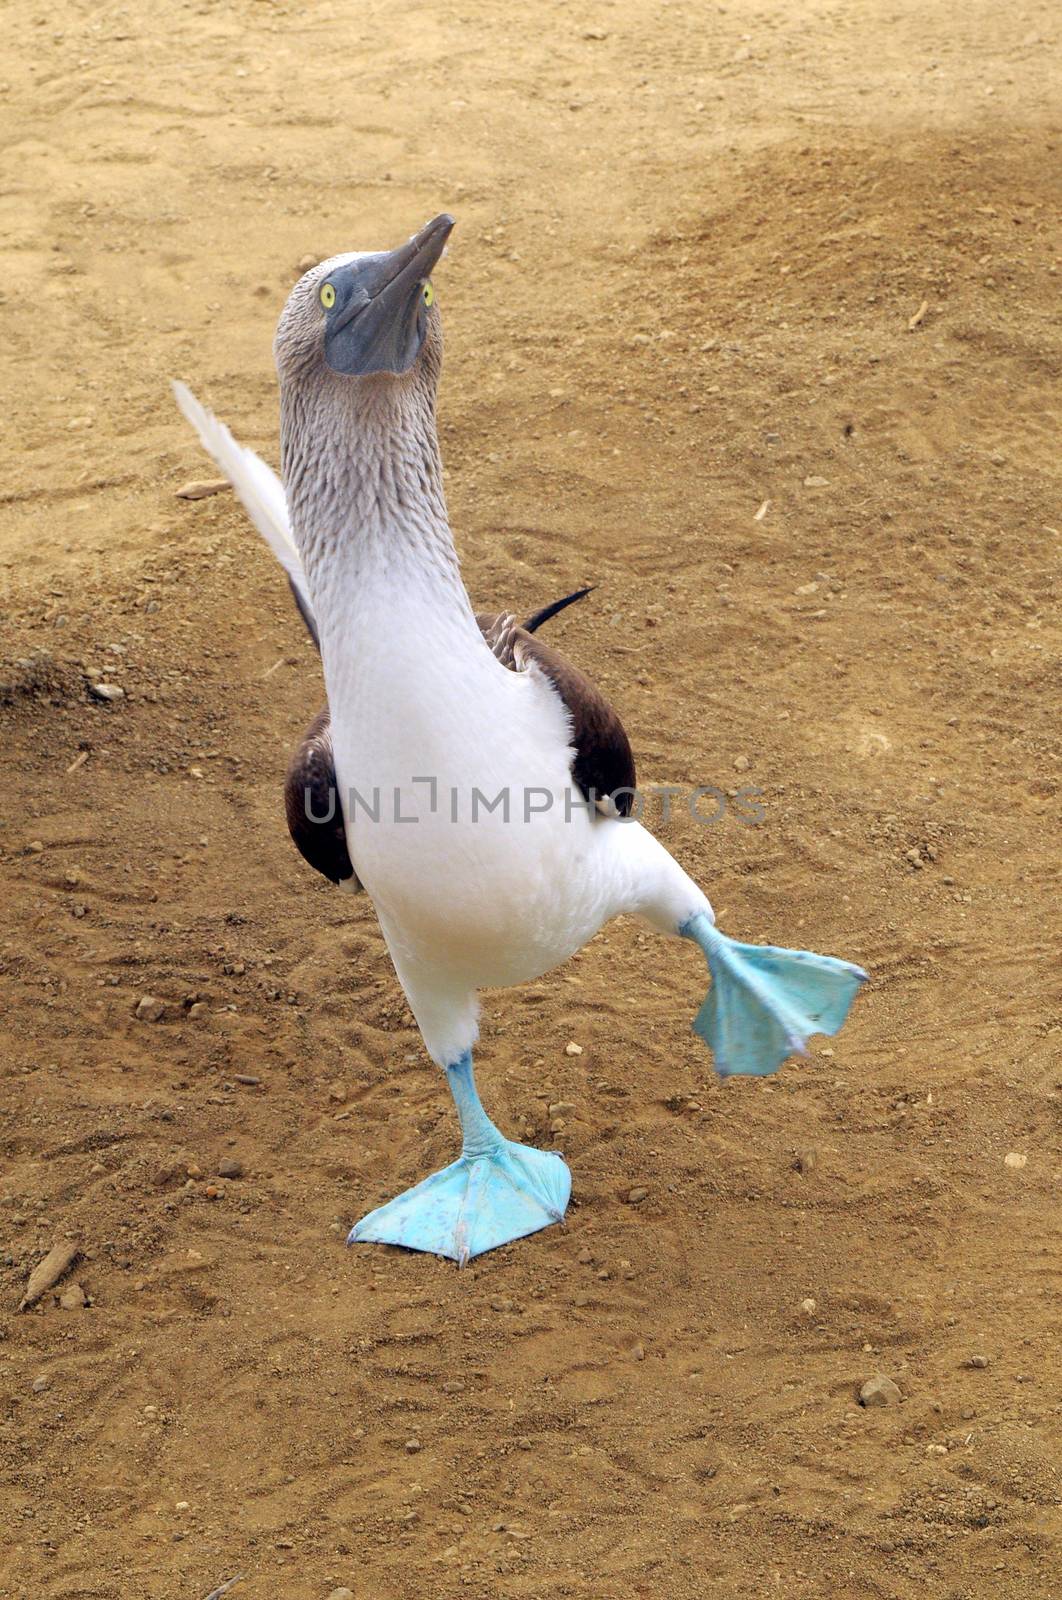 Cheerful mating dance of Blue-footed boobie. Galapagos, Ecuador by xura